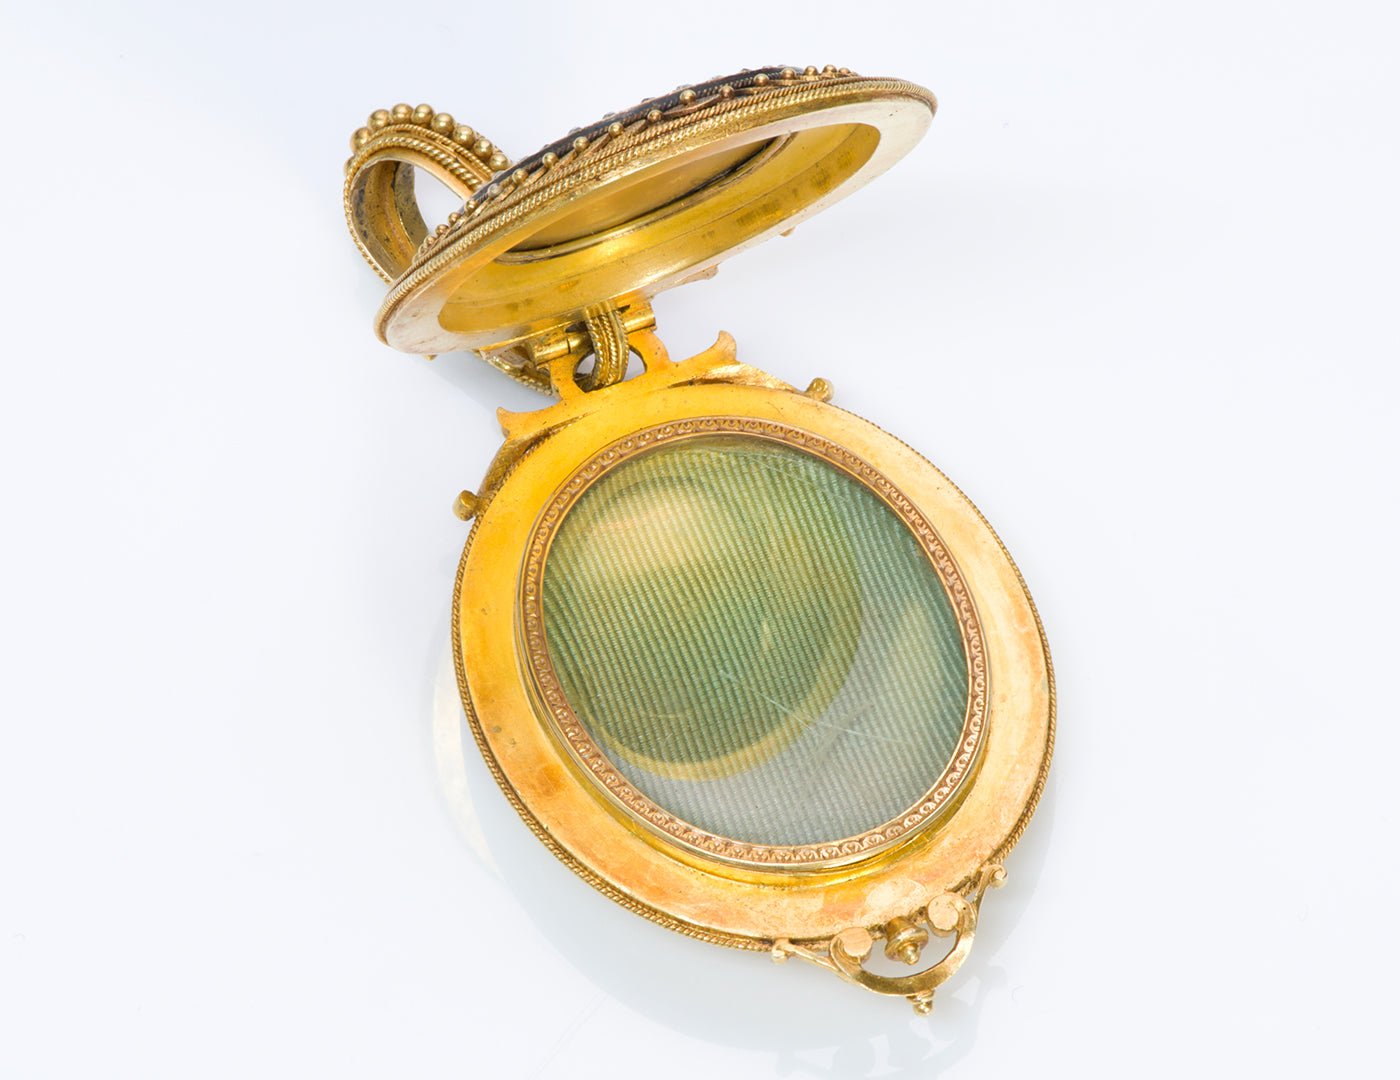 Antique 18K Gold Enamel Diamond Pendant Locket Attributed to Eugène Fontenay - DSF Antique Jewelry